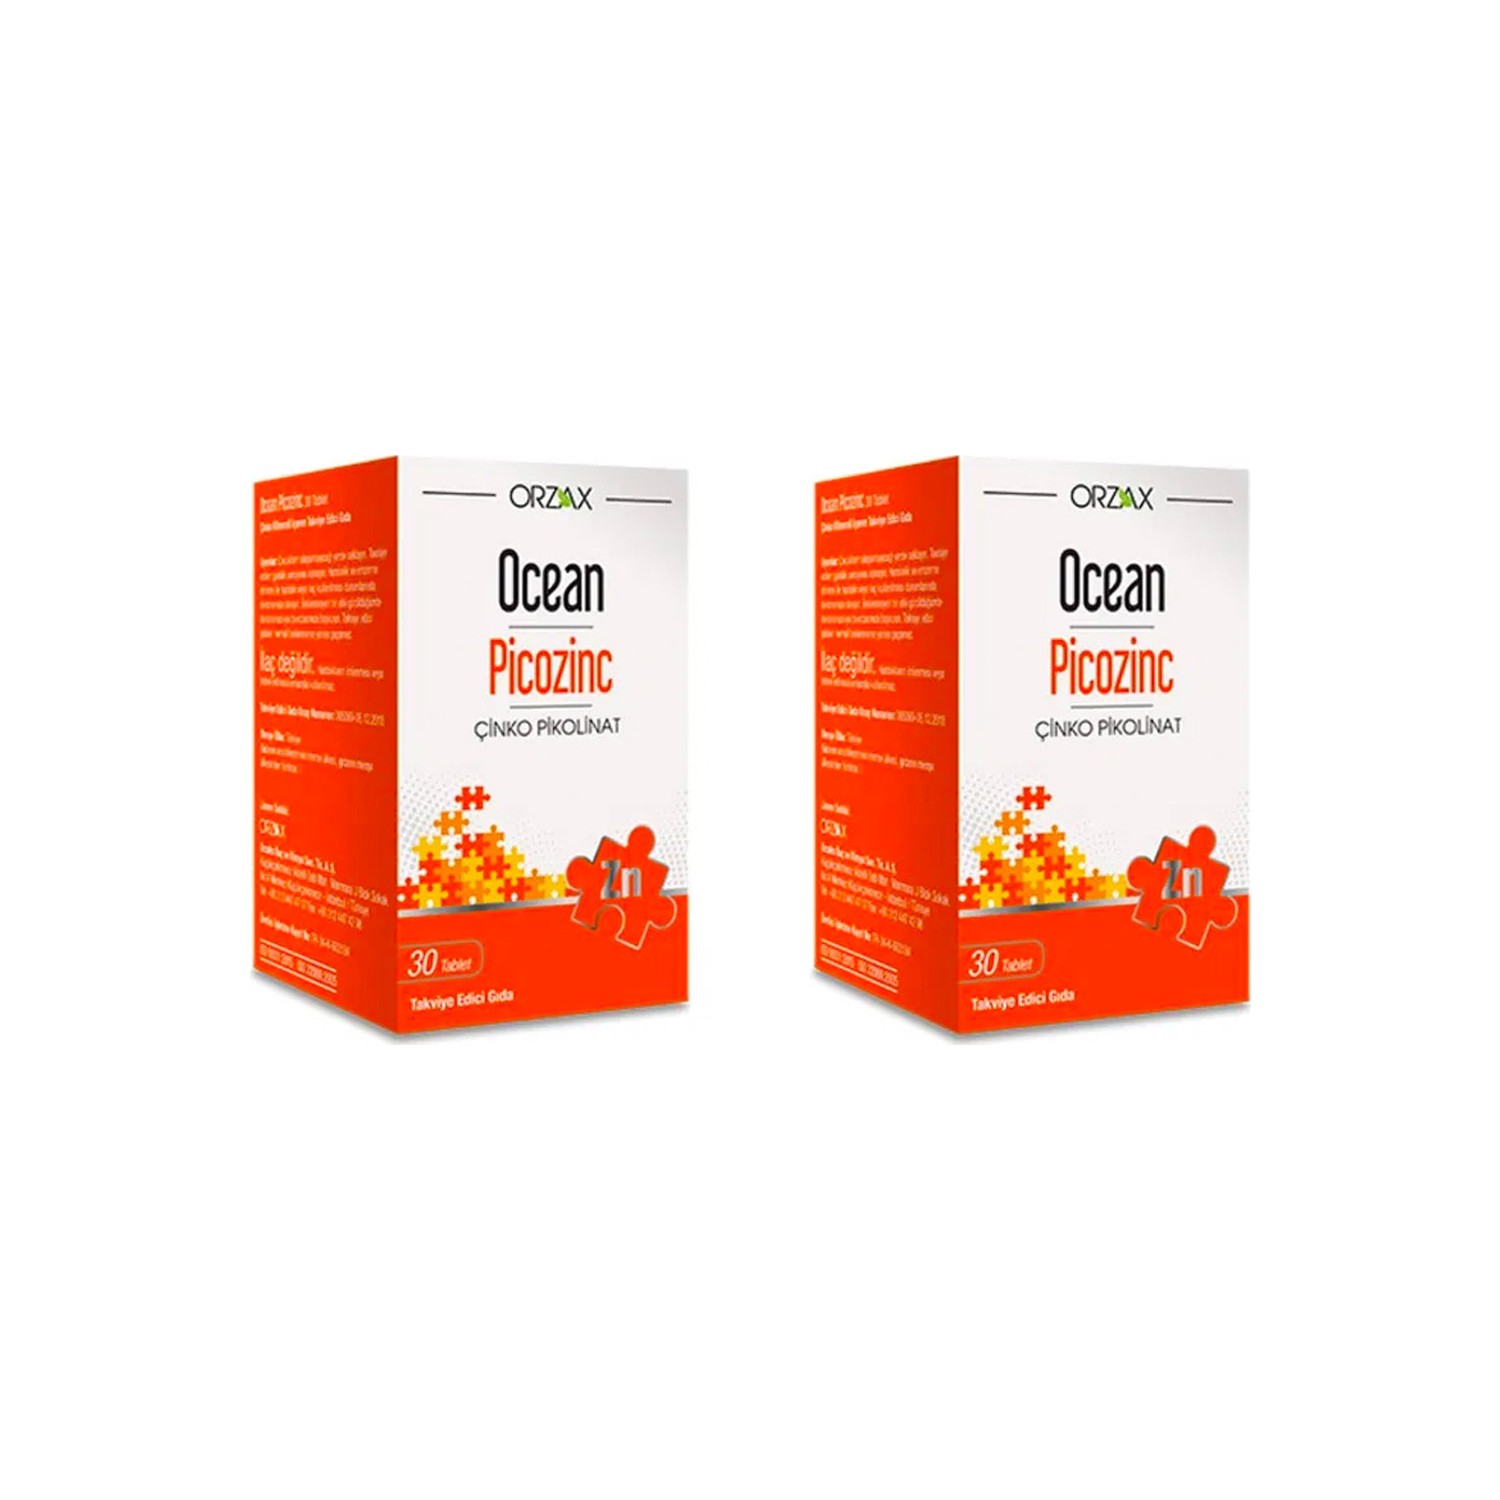 Пищевая добавка Orzax Ocean Picozinc Cinko Picolinate, 2 упаковки по 30 таблеток пищевая добавка ocean picozinc cinko picolinate 30 таблеток